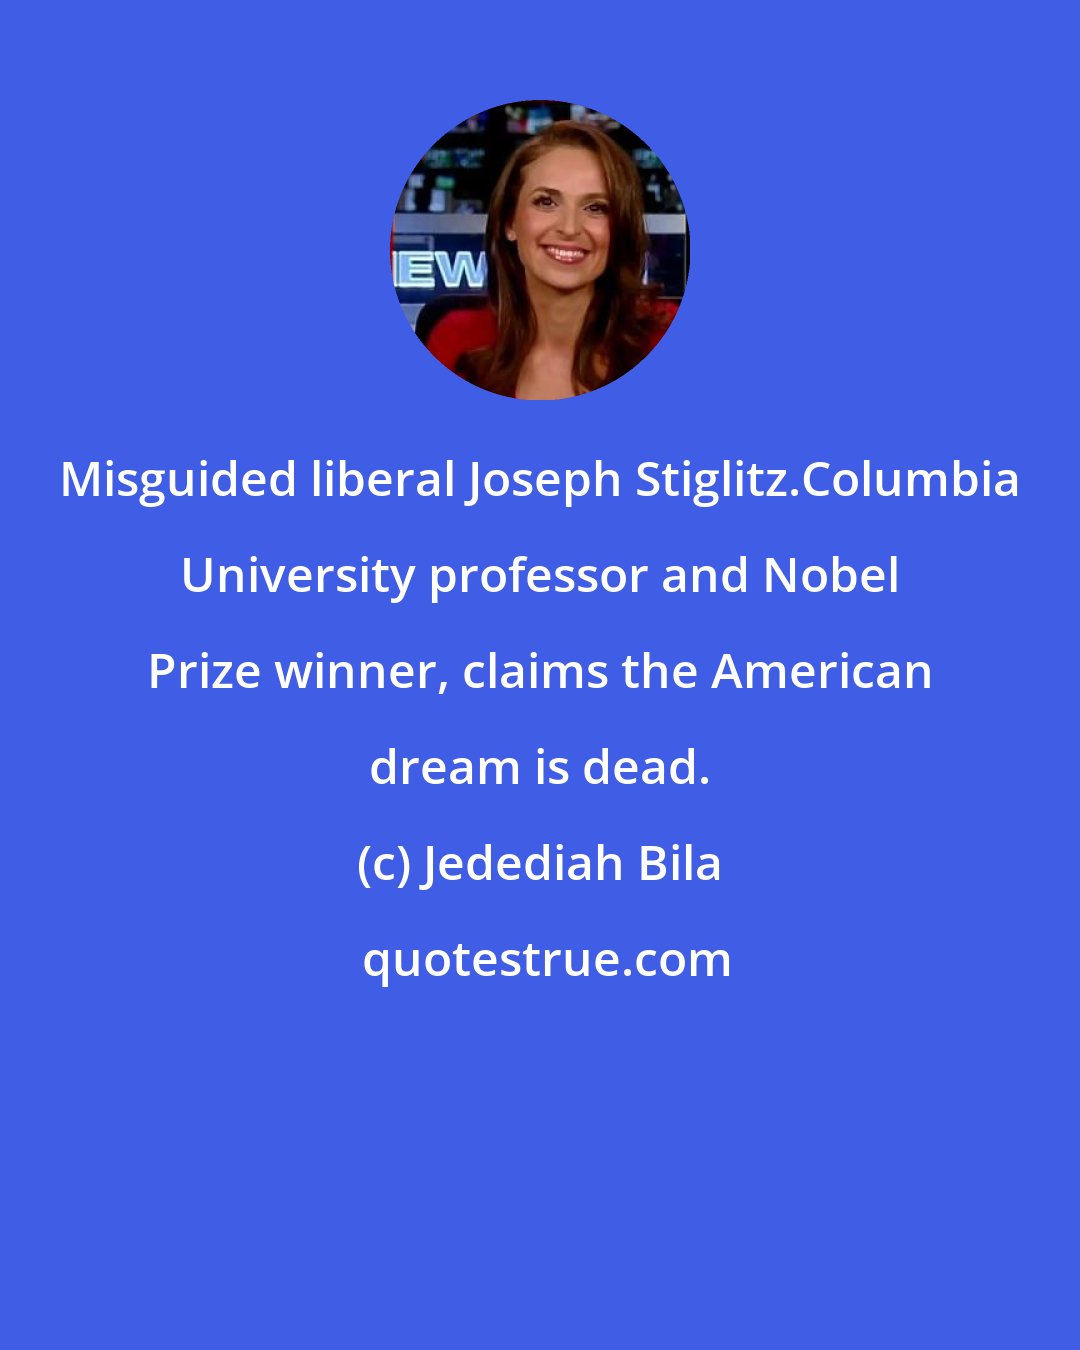 Jedediah Bila: Misguided liberal Joseph Stiglitz.Columbia University professor and Nobel Prize winner, claims the American dream is dead.